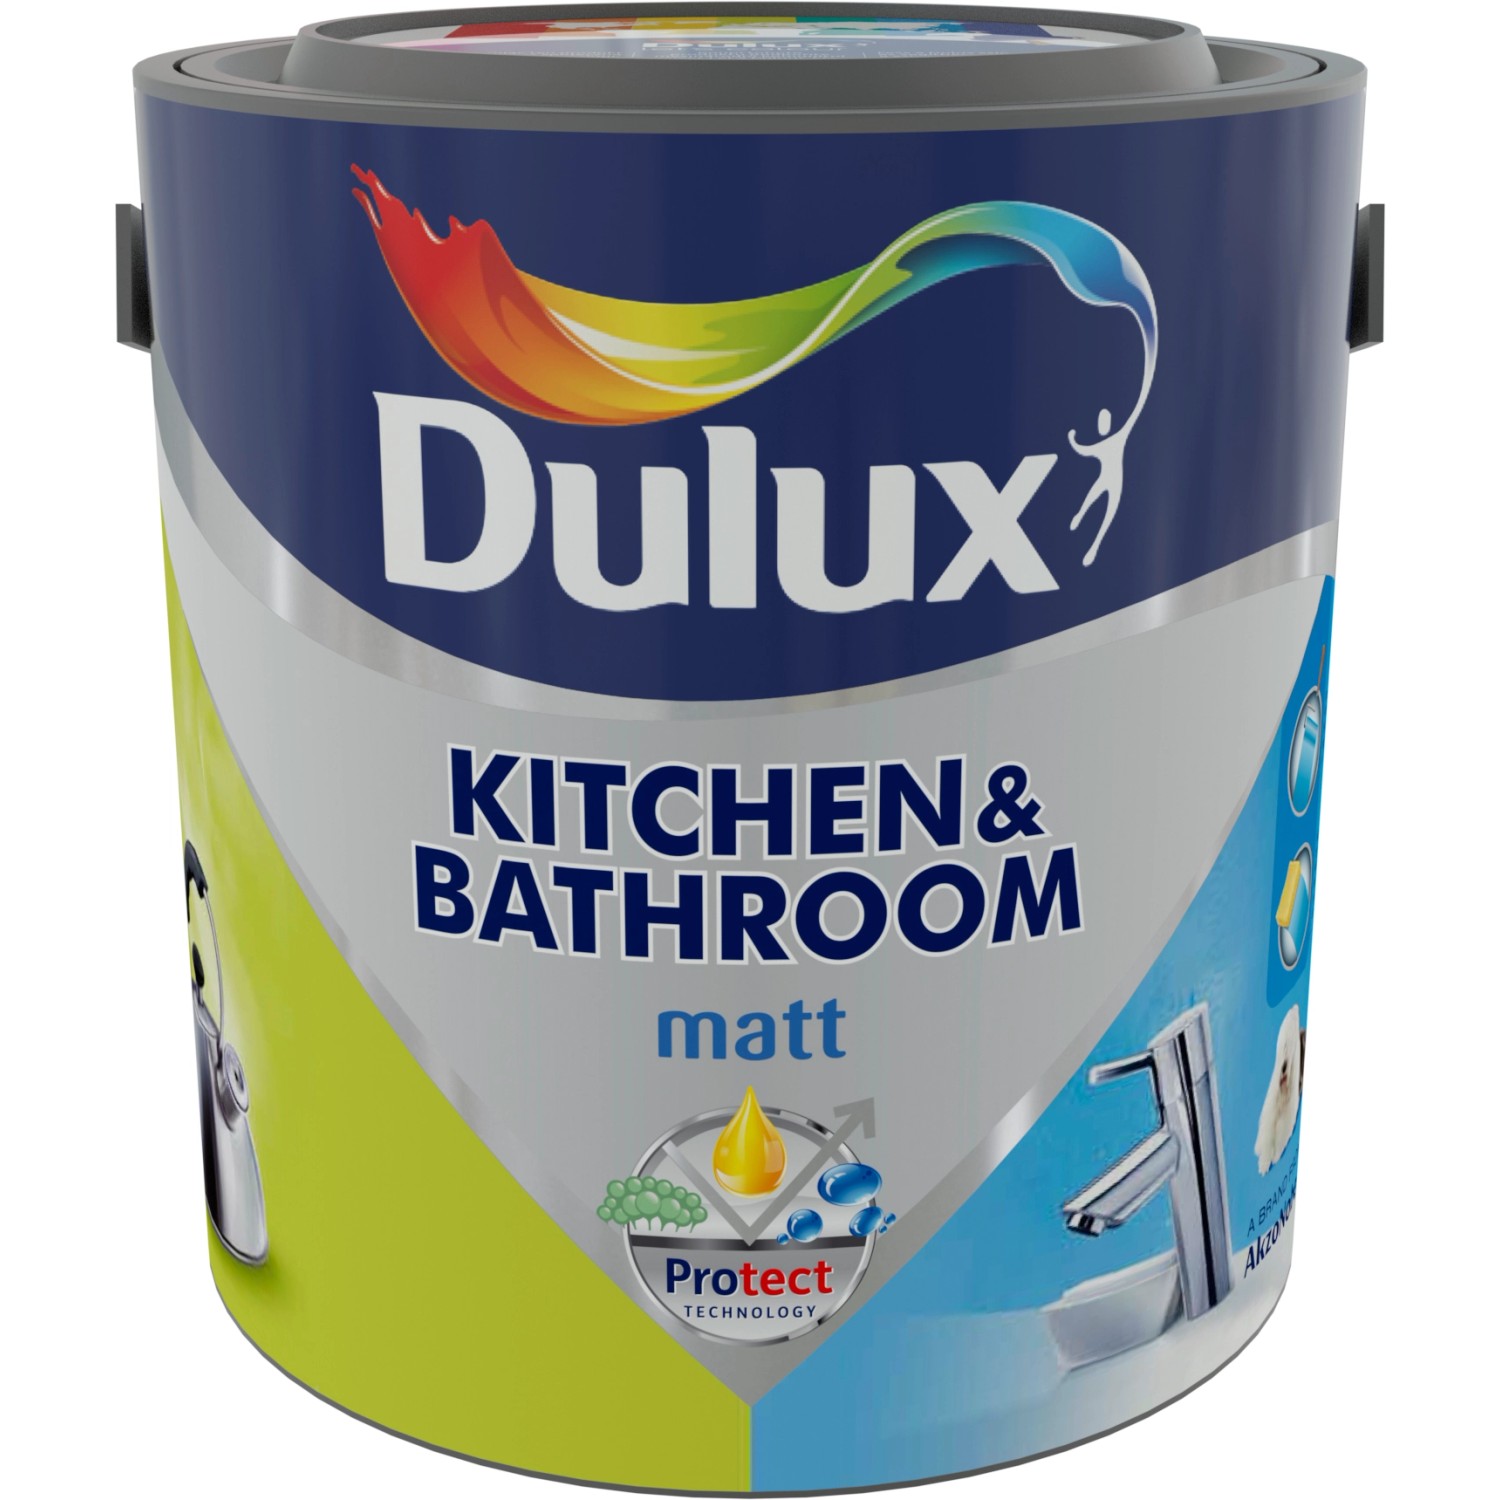 Ультра резист. Краска Dulux Kitchen Bathroom. Краска Dulux для ванной и кухни. Дюлюкс для ванной. Дулюкс для кухни и ванной.